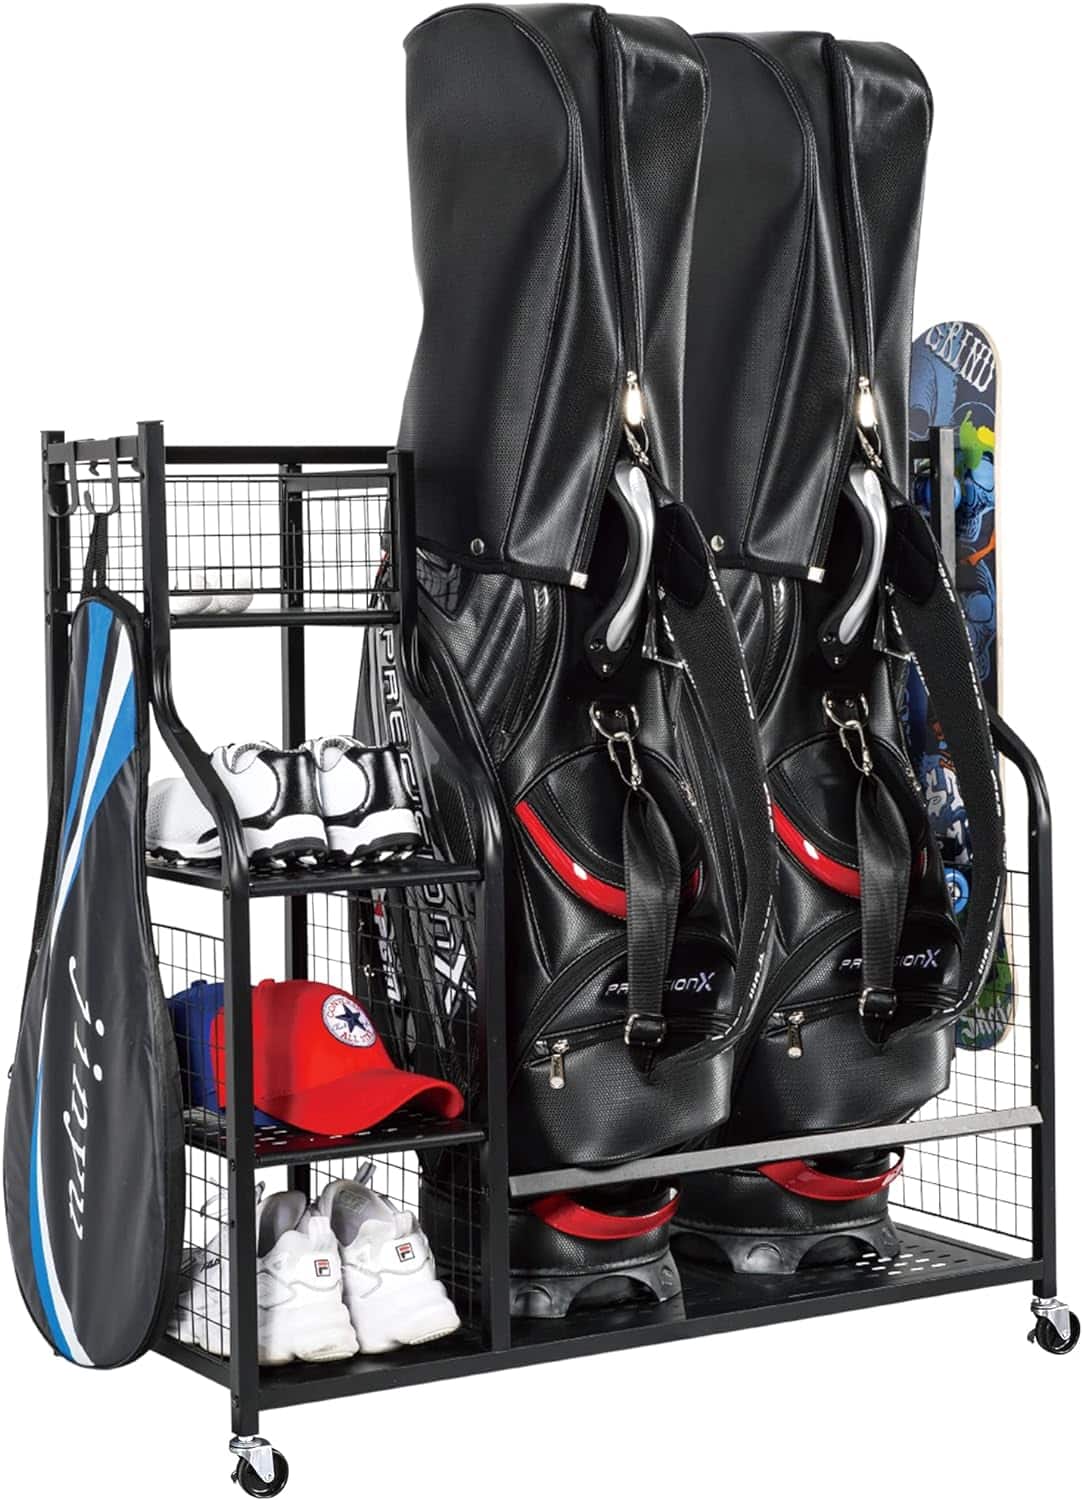 PLKOW Golf Bag Storage Garage Organizer: The Ultimate Solution for Golf Equipment Storage